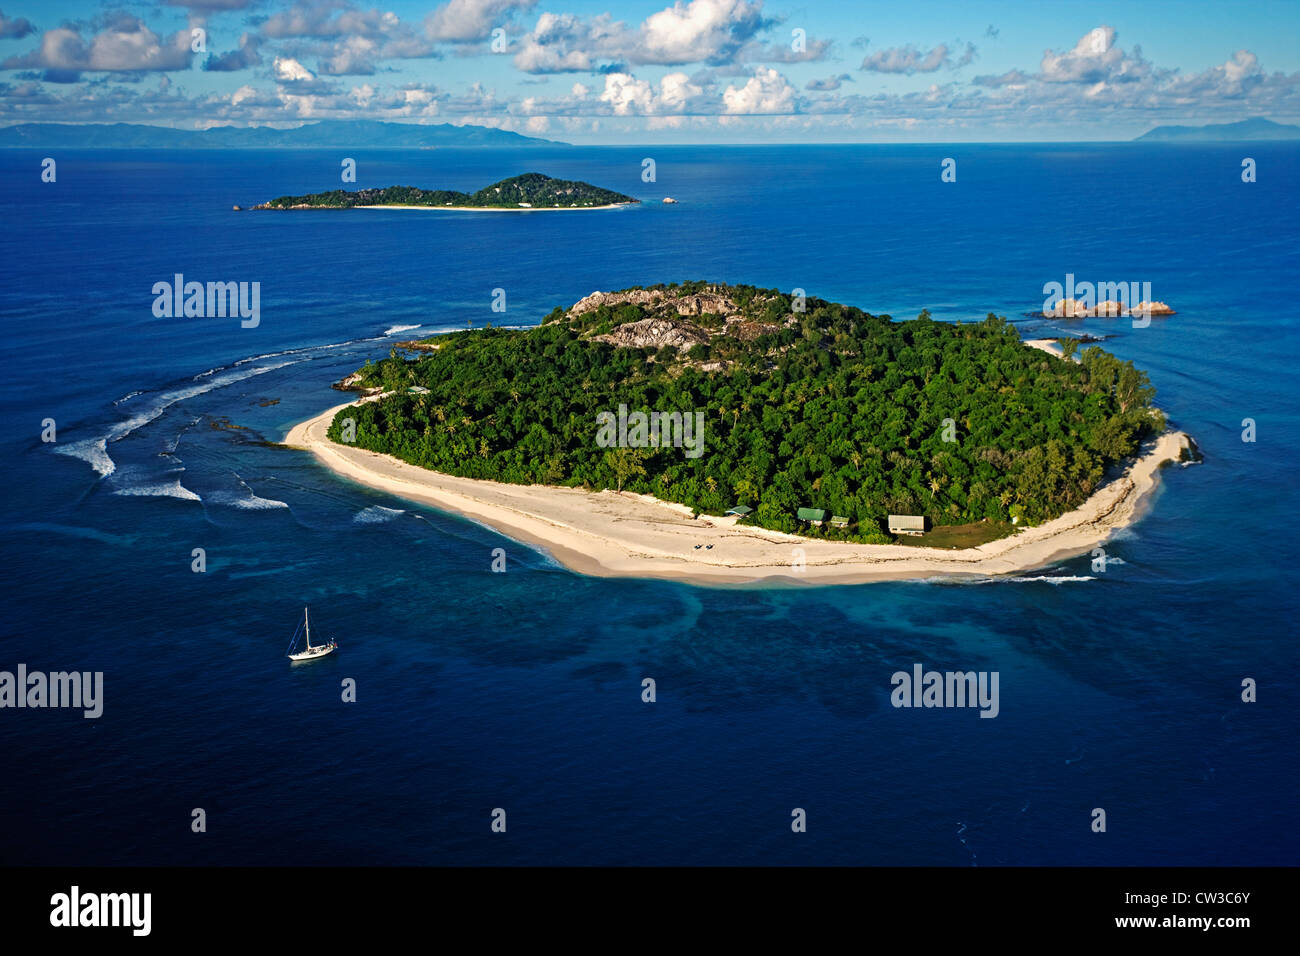 Vista aerea del cugino isola cucina con isola in background.Seychelles Foto Stock